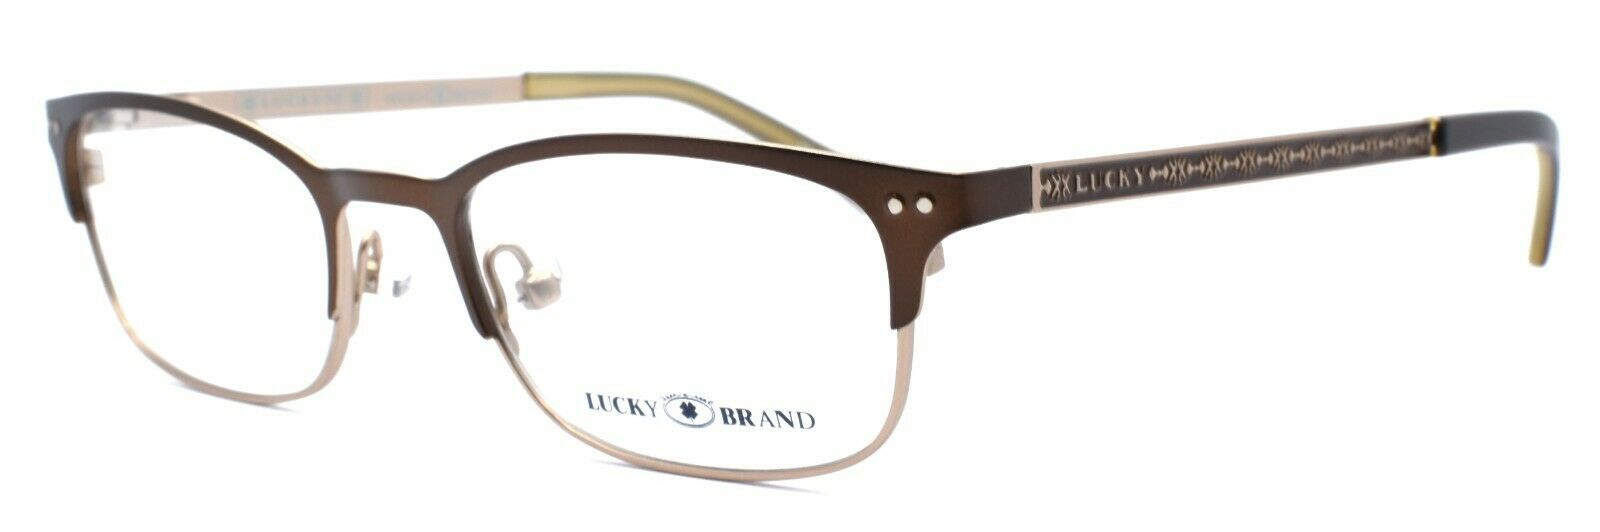 1-LUCKY BRAND Clever Kids Unisex Eyeglasses Frames 45-17-130 Brown + CASE-751286250954-IKSpecs